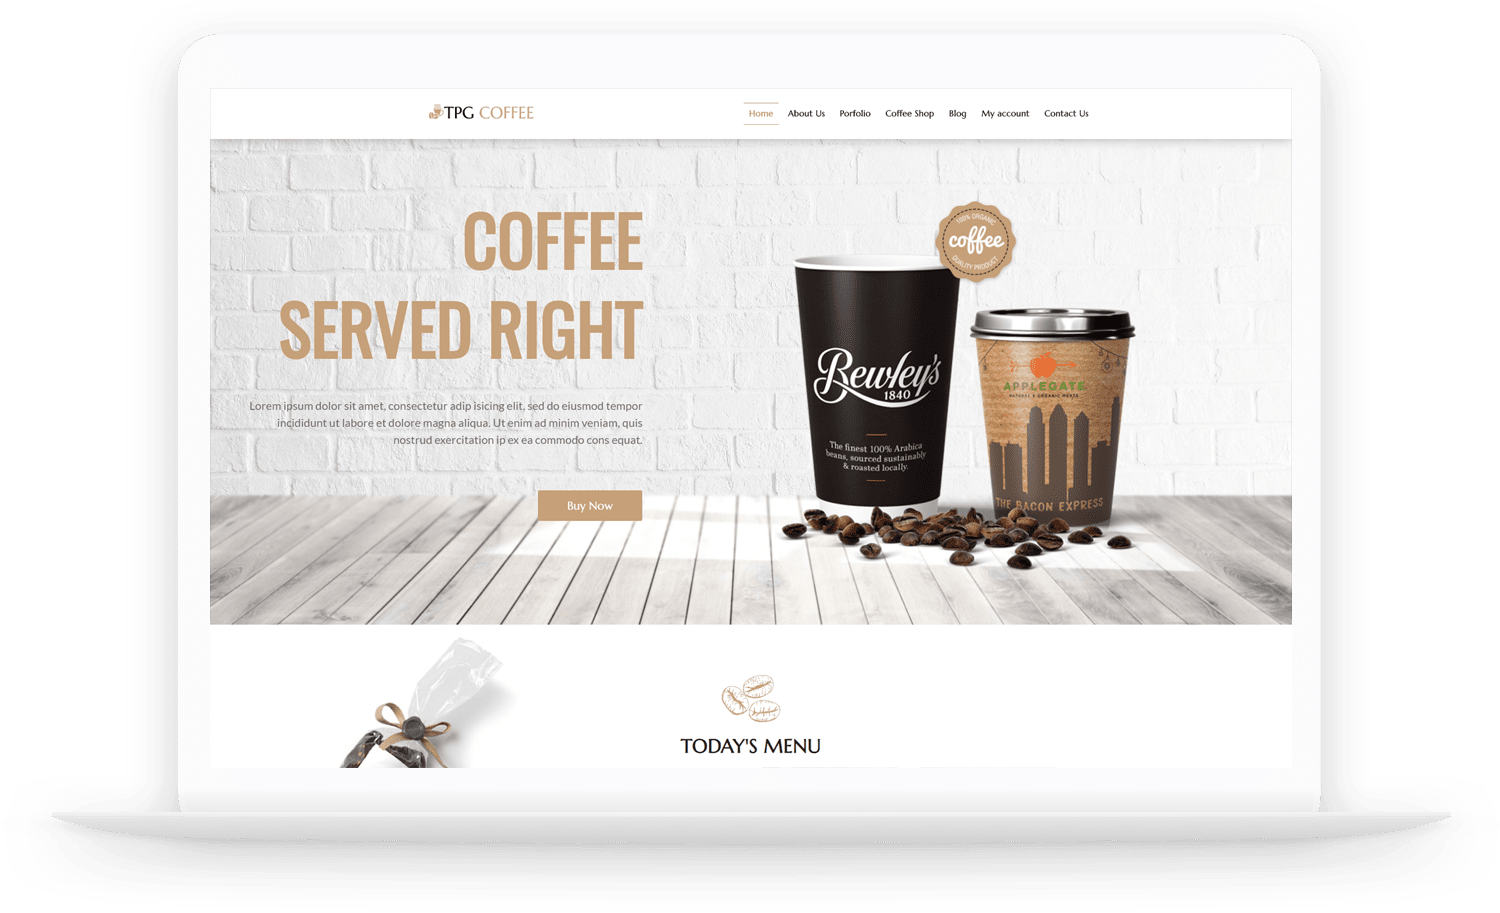 Tpg-Coffee-Free-Responsive-Wordpress-Theme